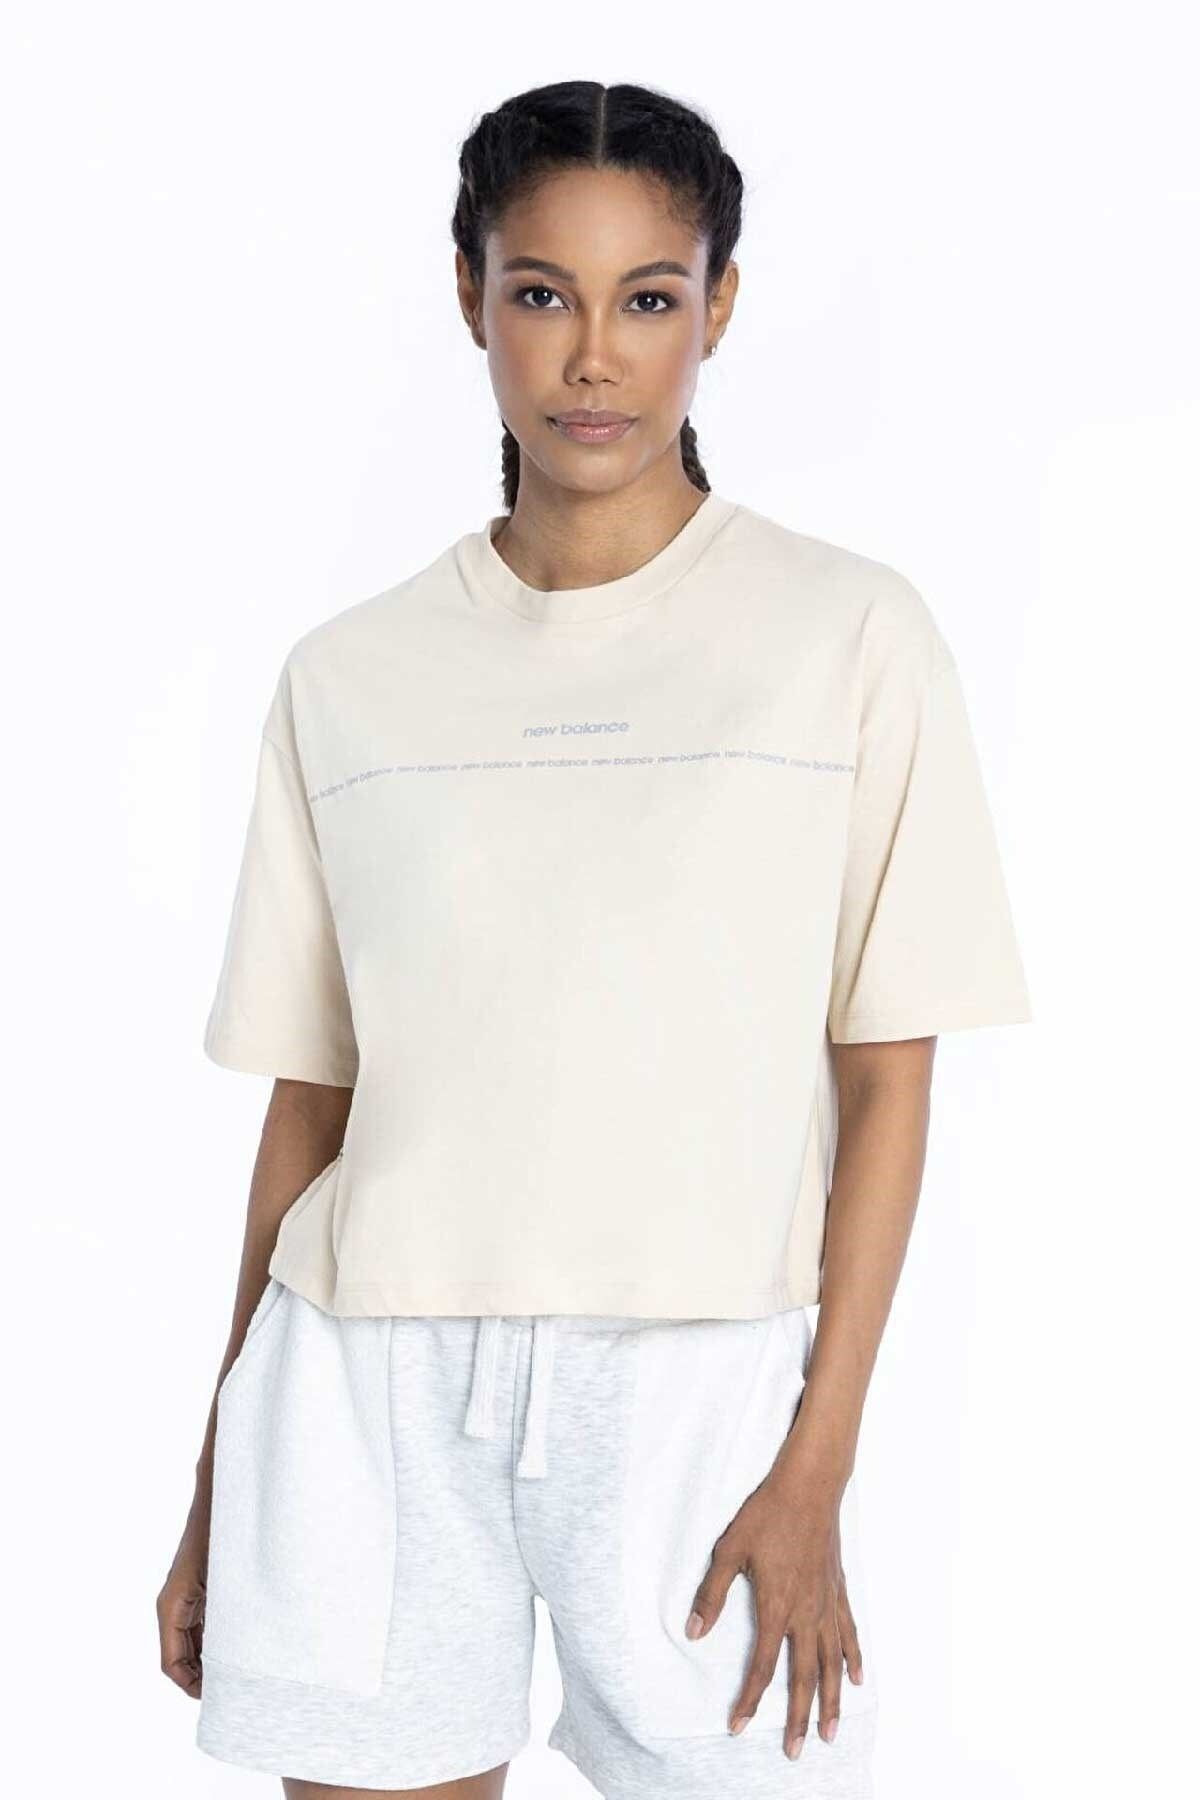 New Balance Lifestyle Kadın Tişört Wnt1349-mop